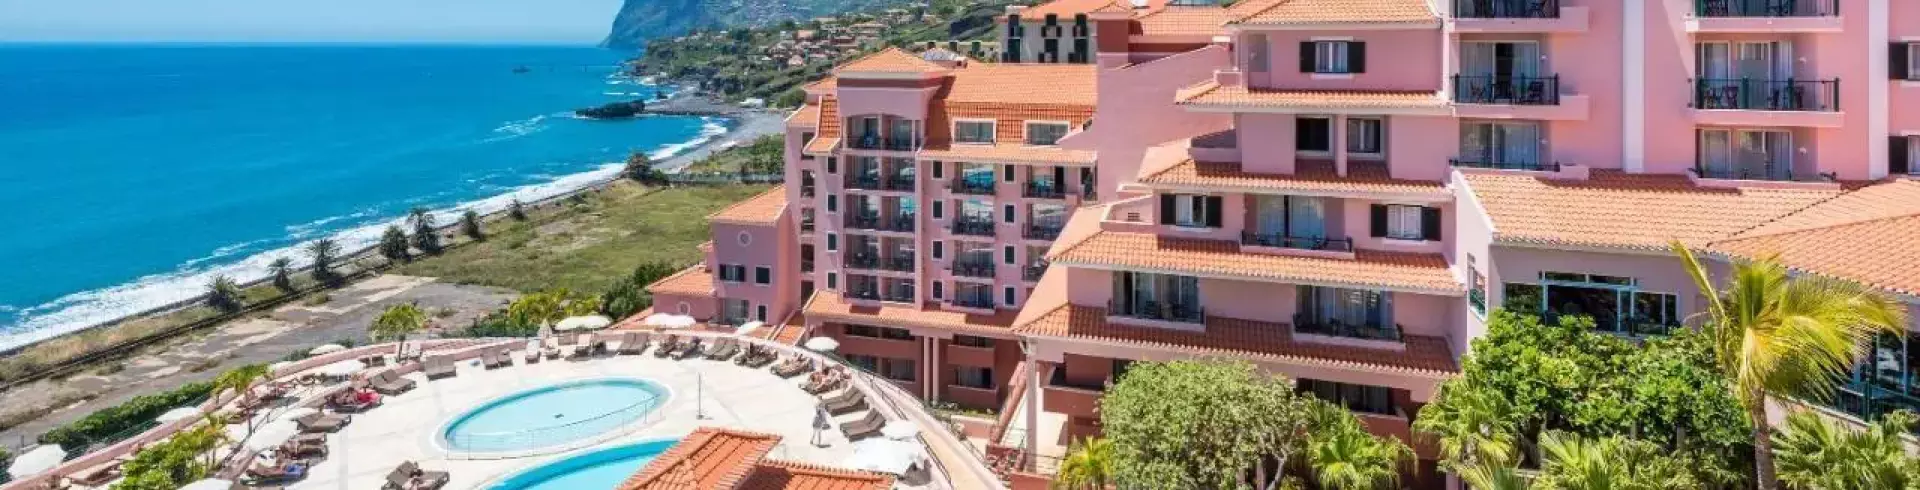 Pestana Royal Premium Resort All Inclusive